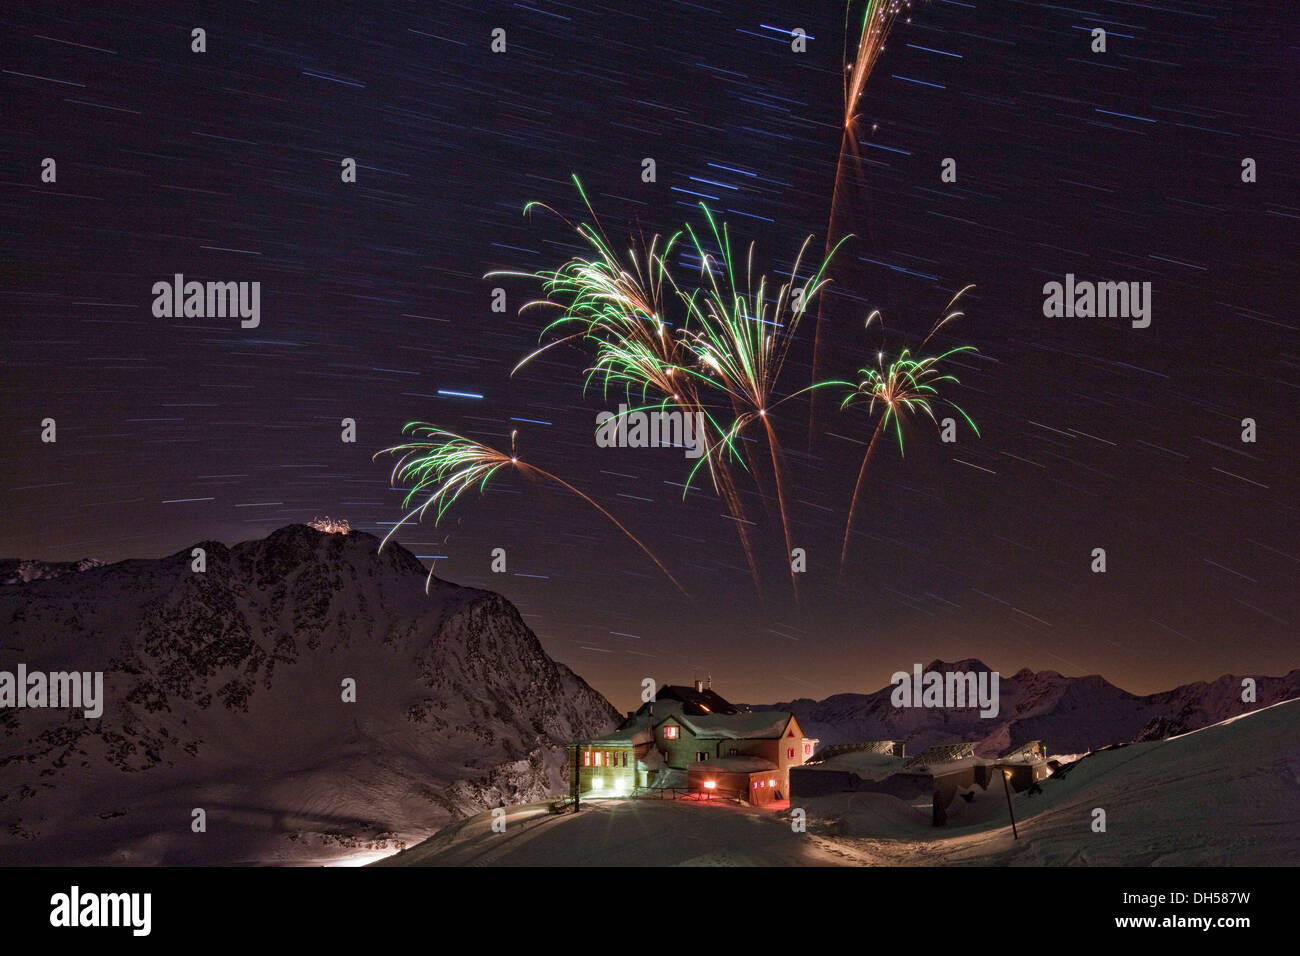 Fireworks, New Year's Eve, Bella Vista hut, Kurzras, Schnalstal, South Tyrol province, Trentino-Alto Adige, Italy Stock Photo